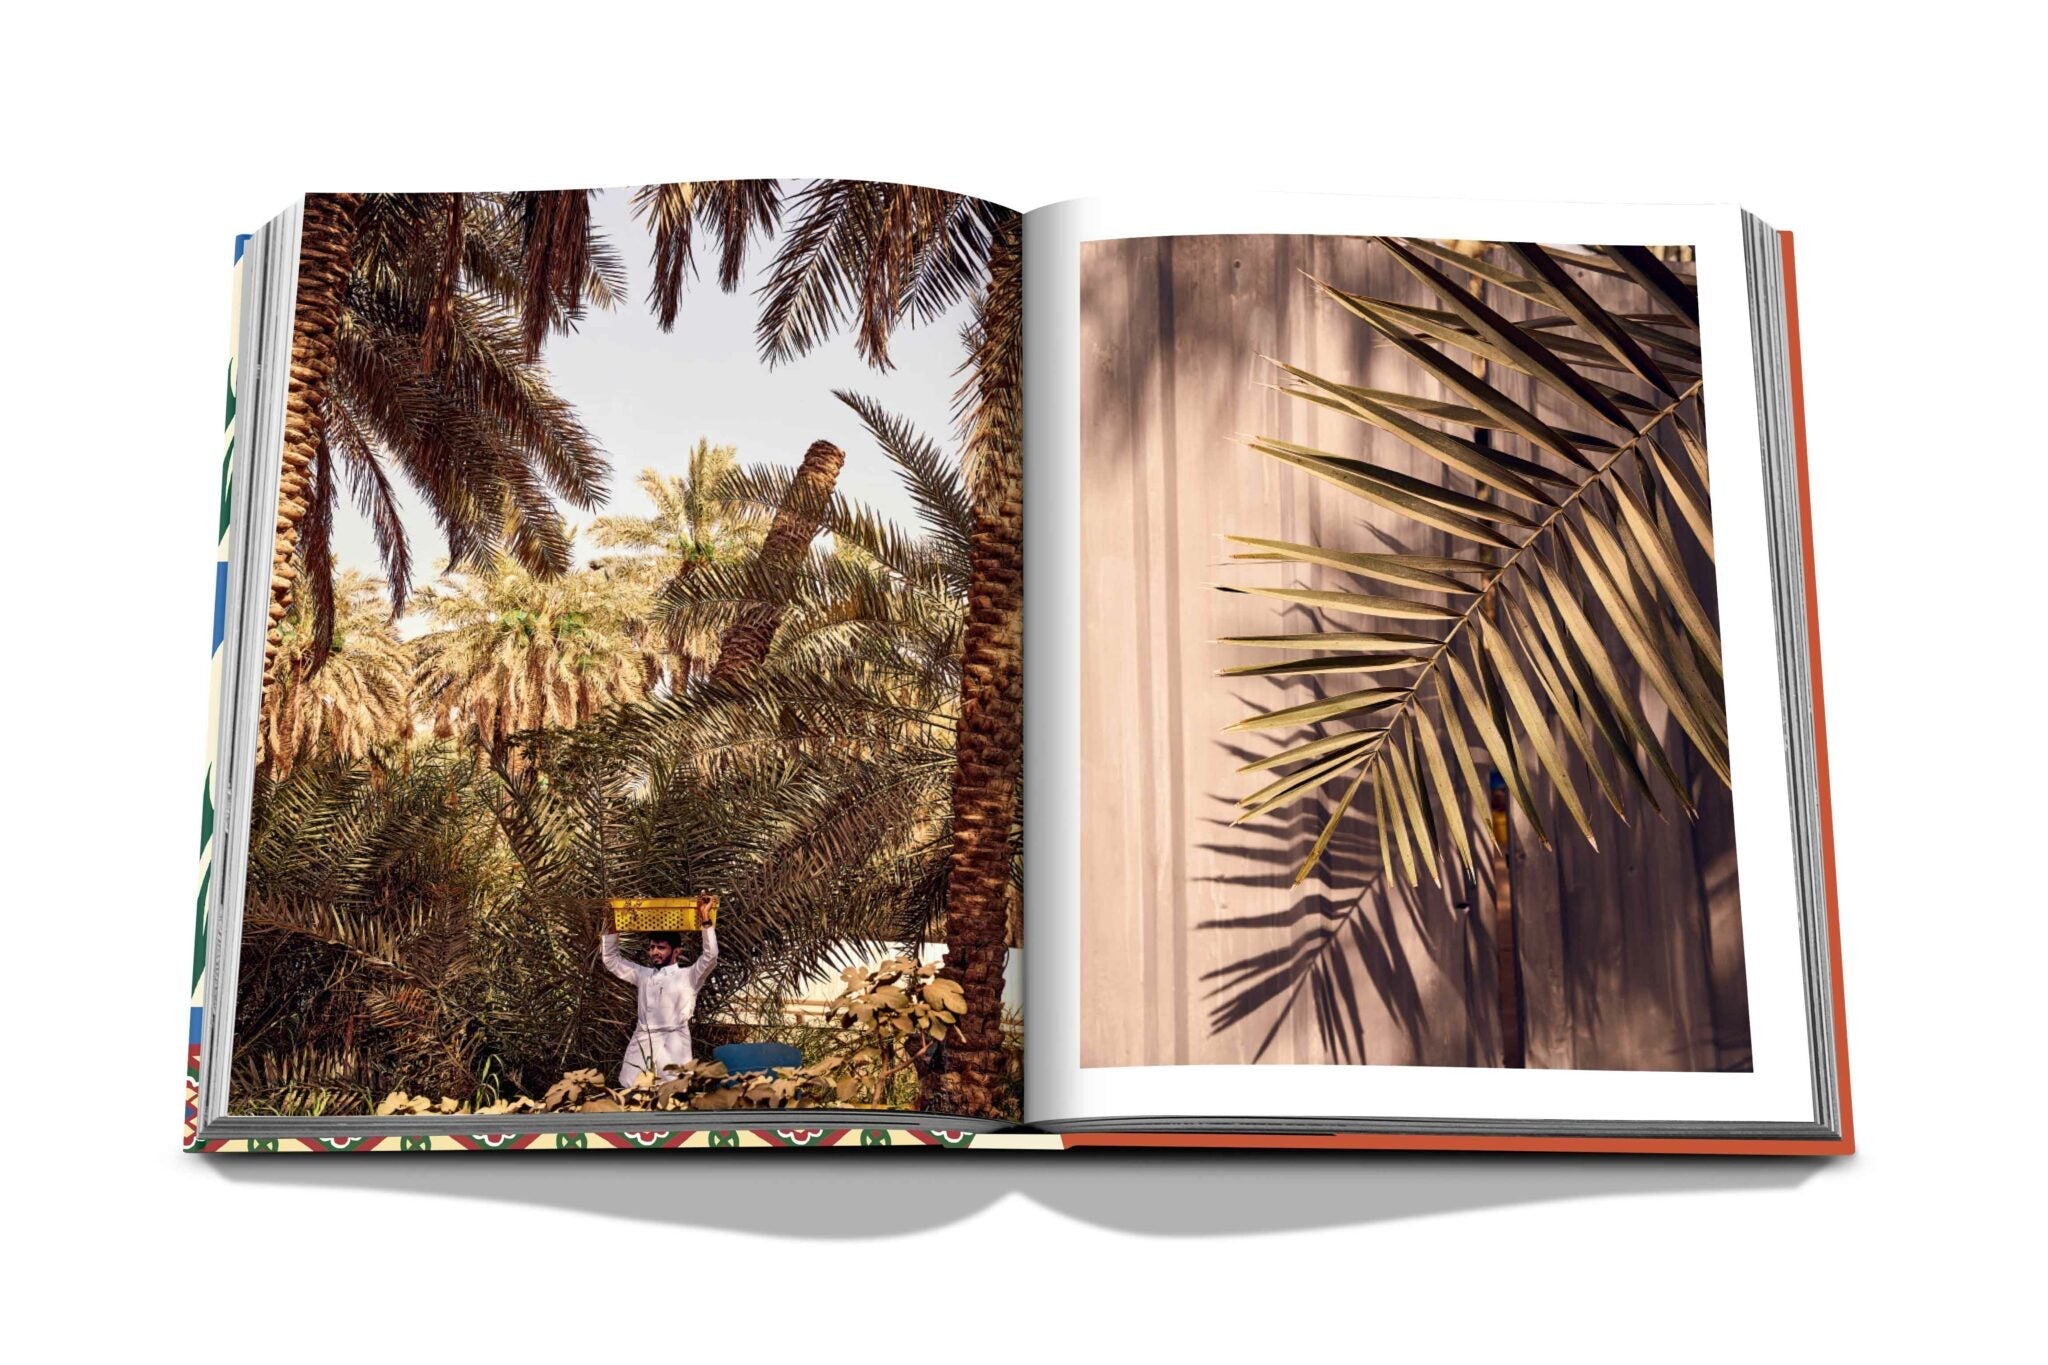 Assouline Saudi Dates: Portrét posvátného ovoce